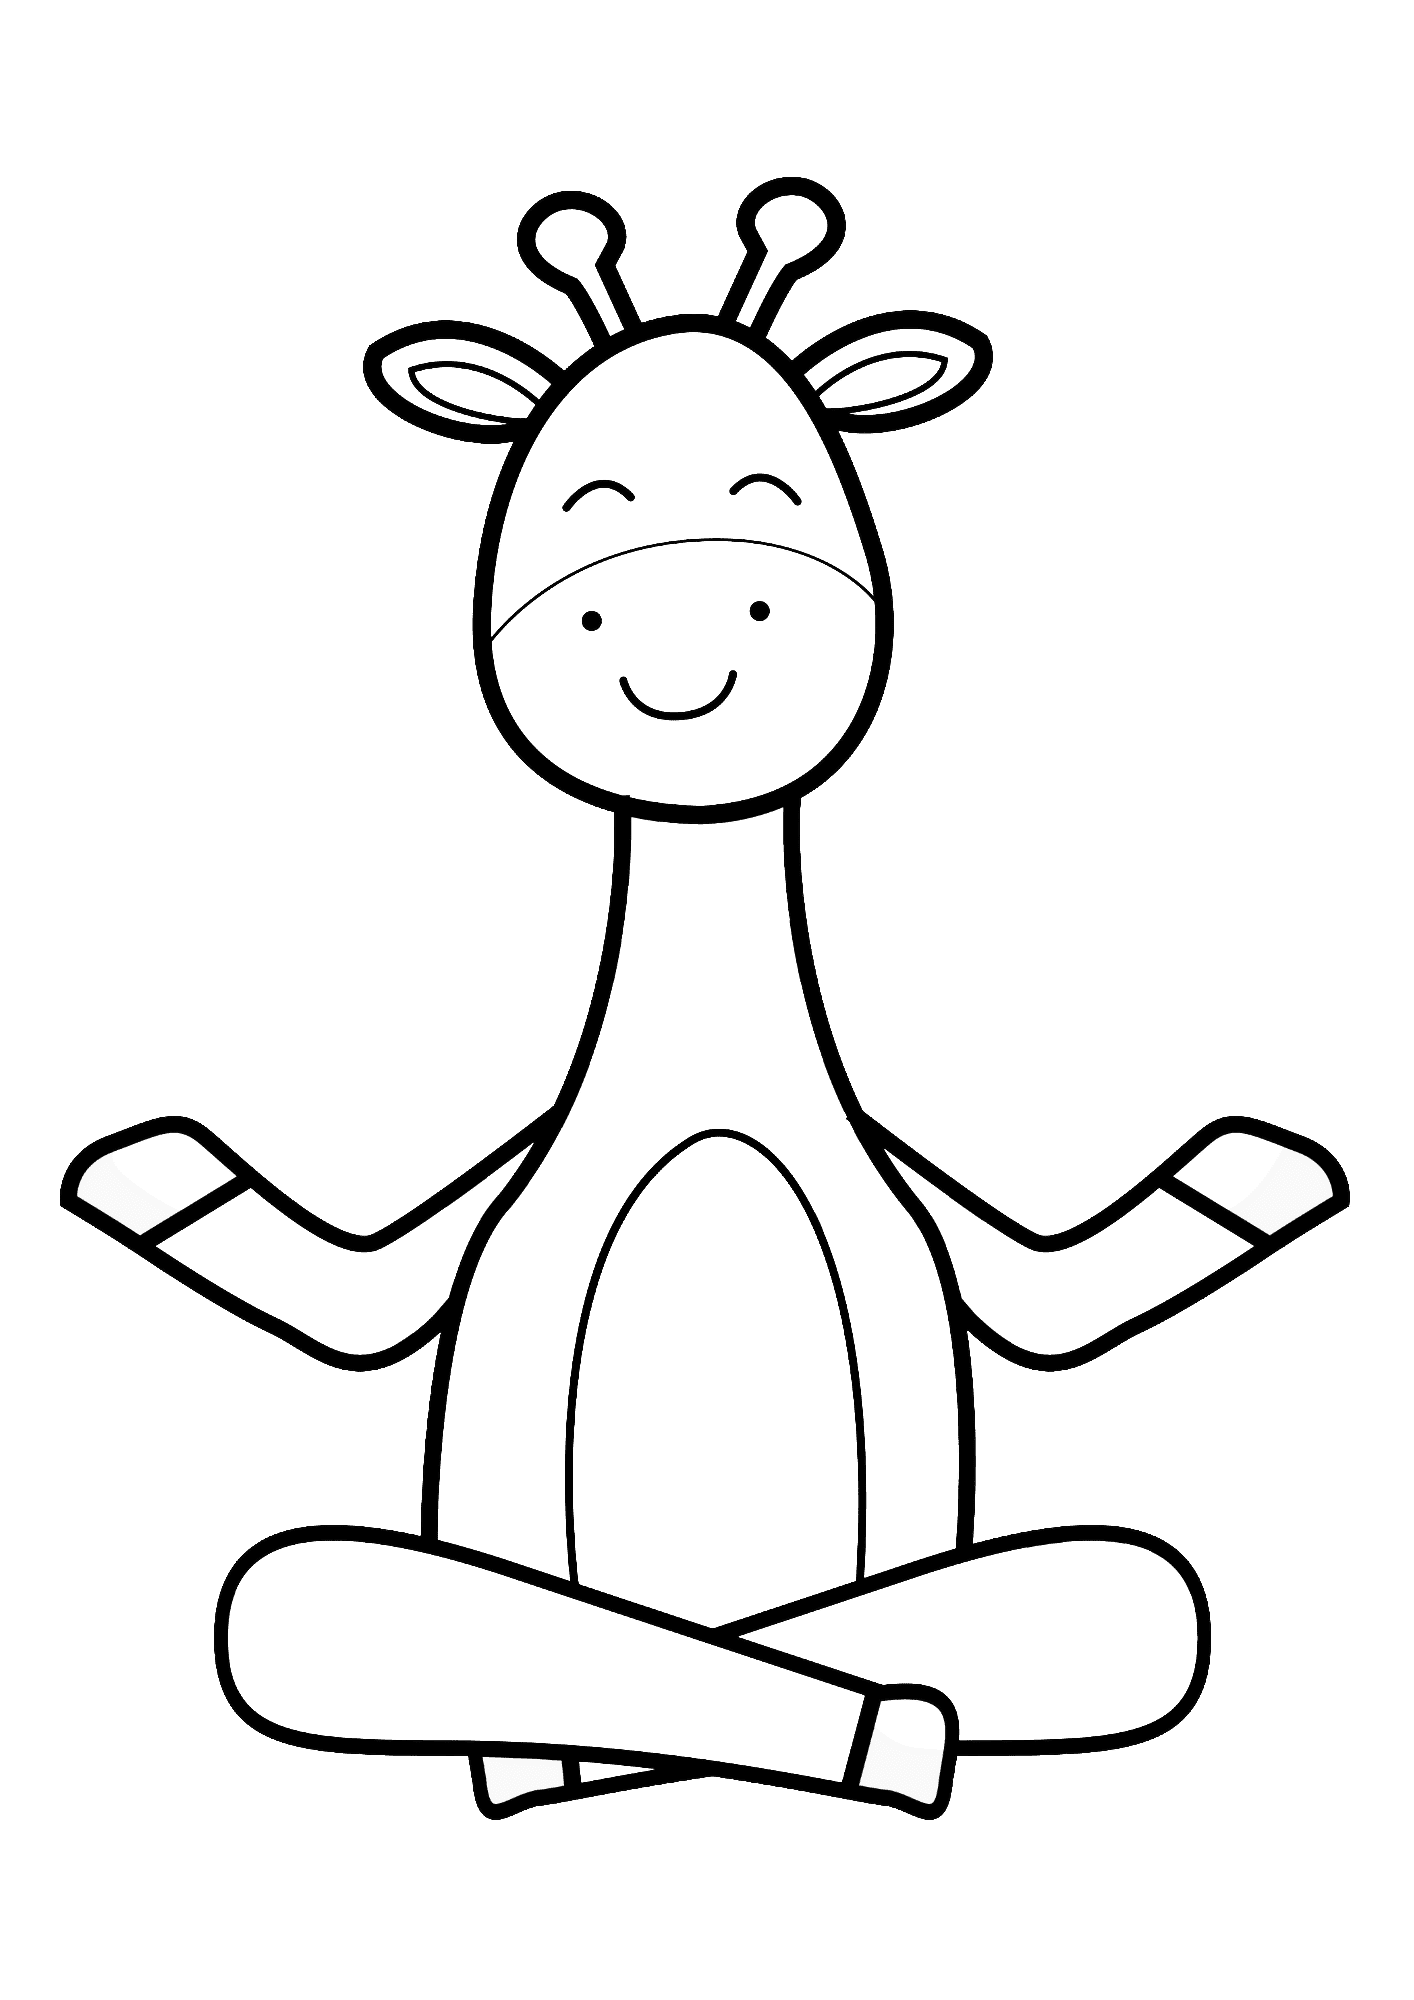 Giraffe Smile Coloring Page